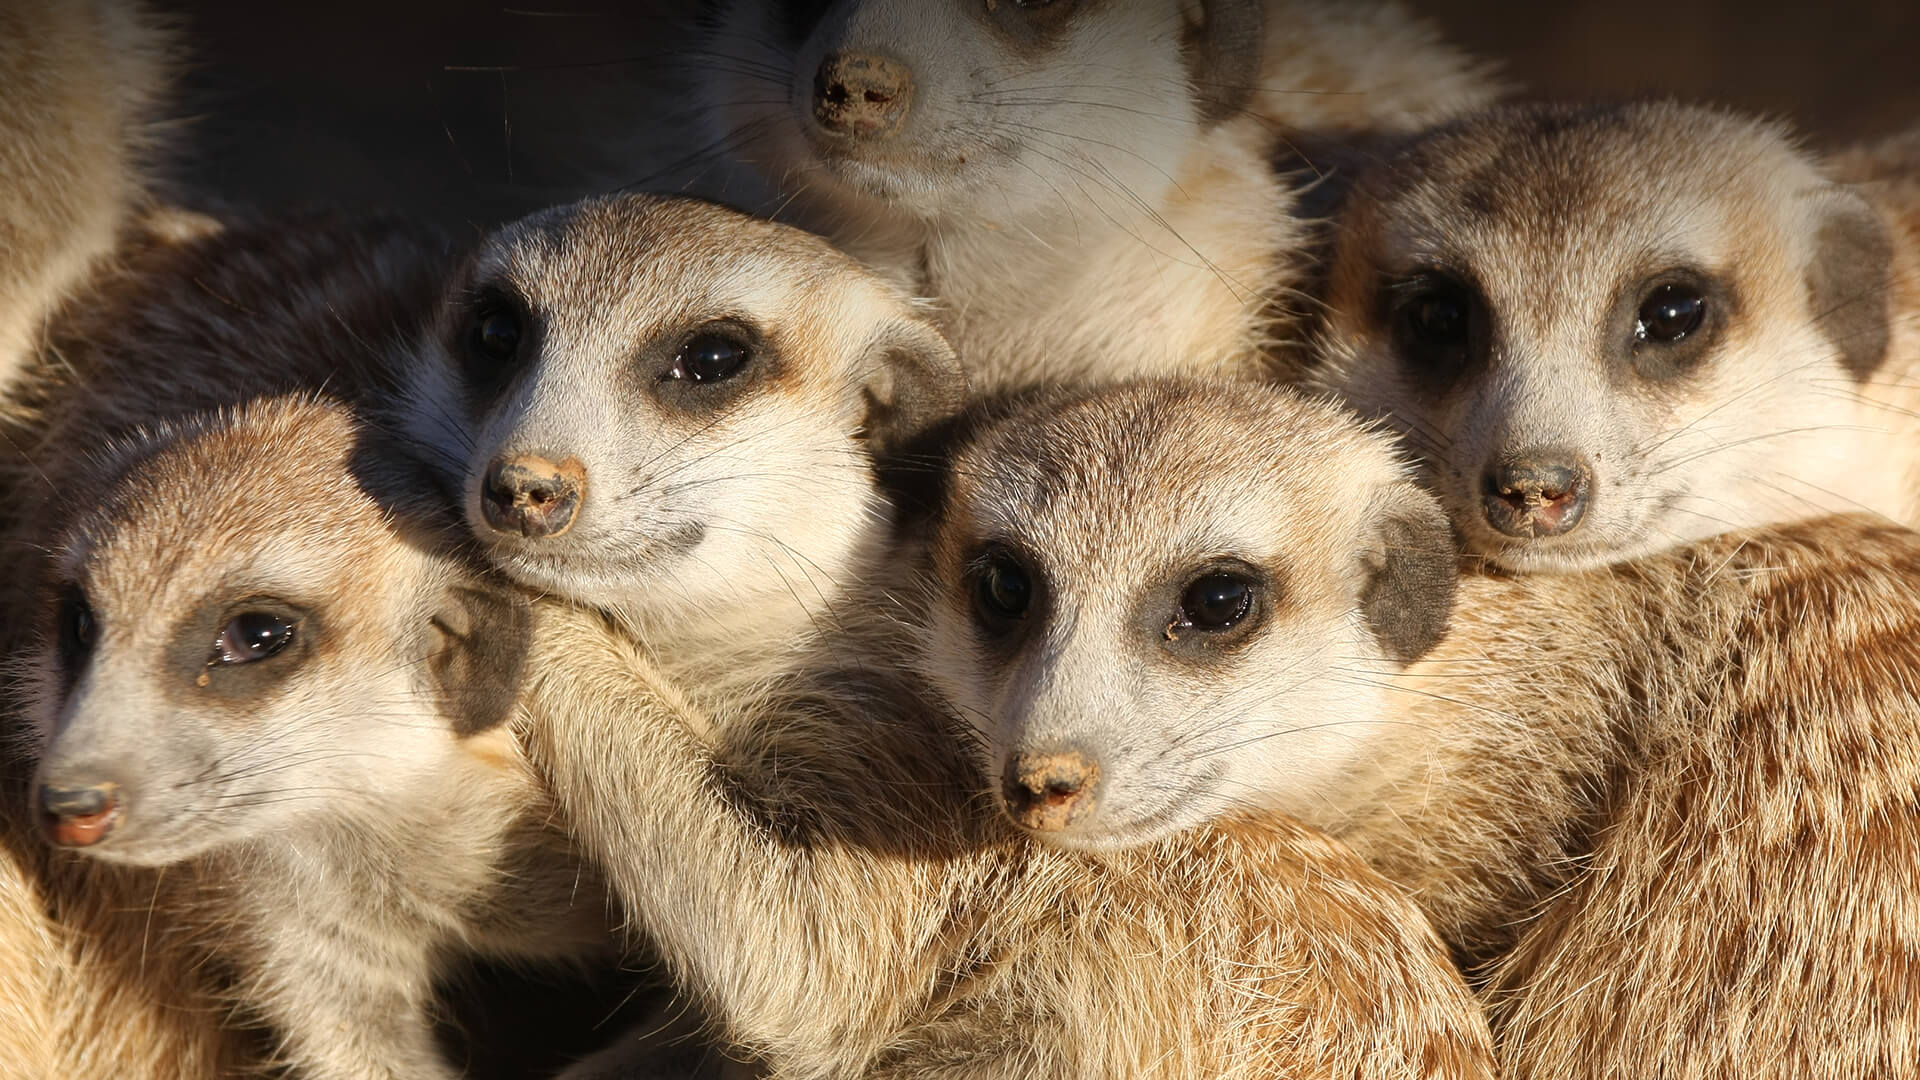 A group of meerkats huddled together 